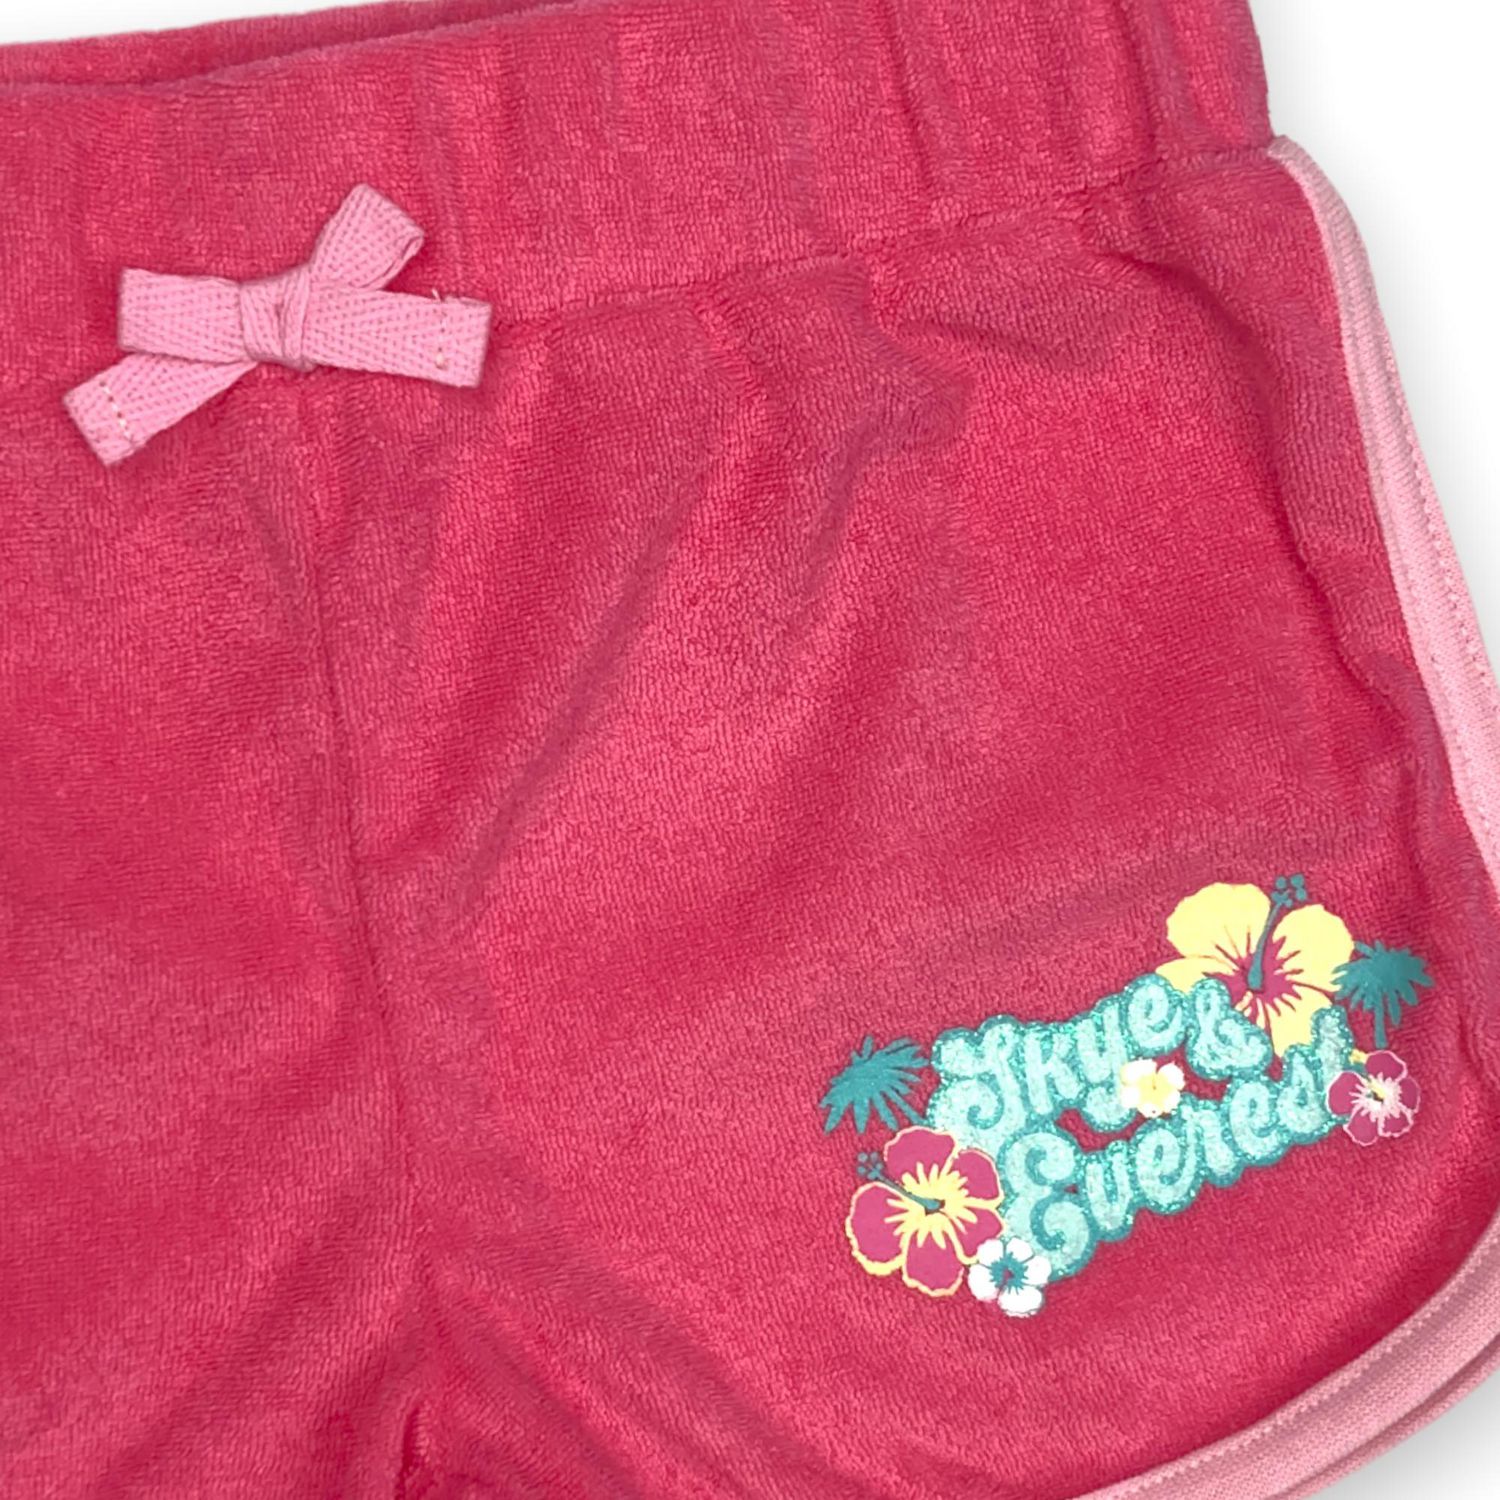 Paw Patrol Girl's shorts. Toddler girls short dolphin shorts. These